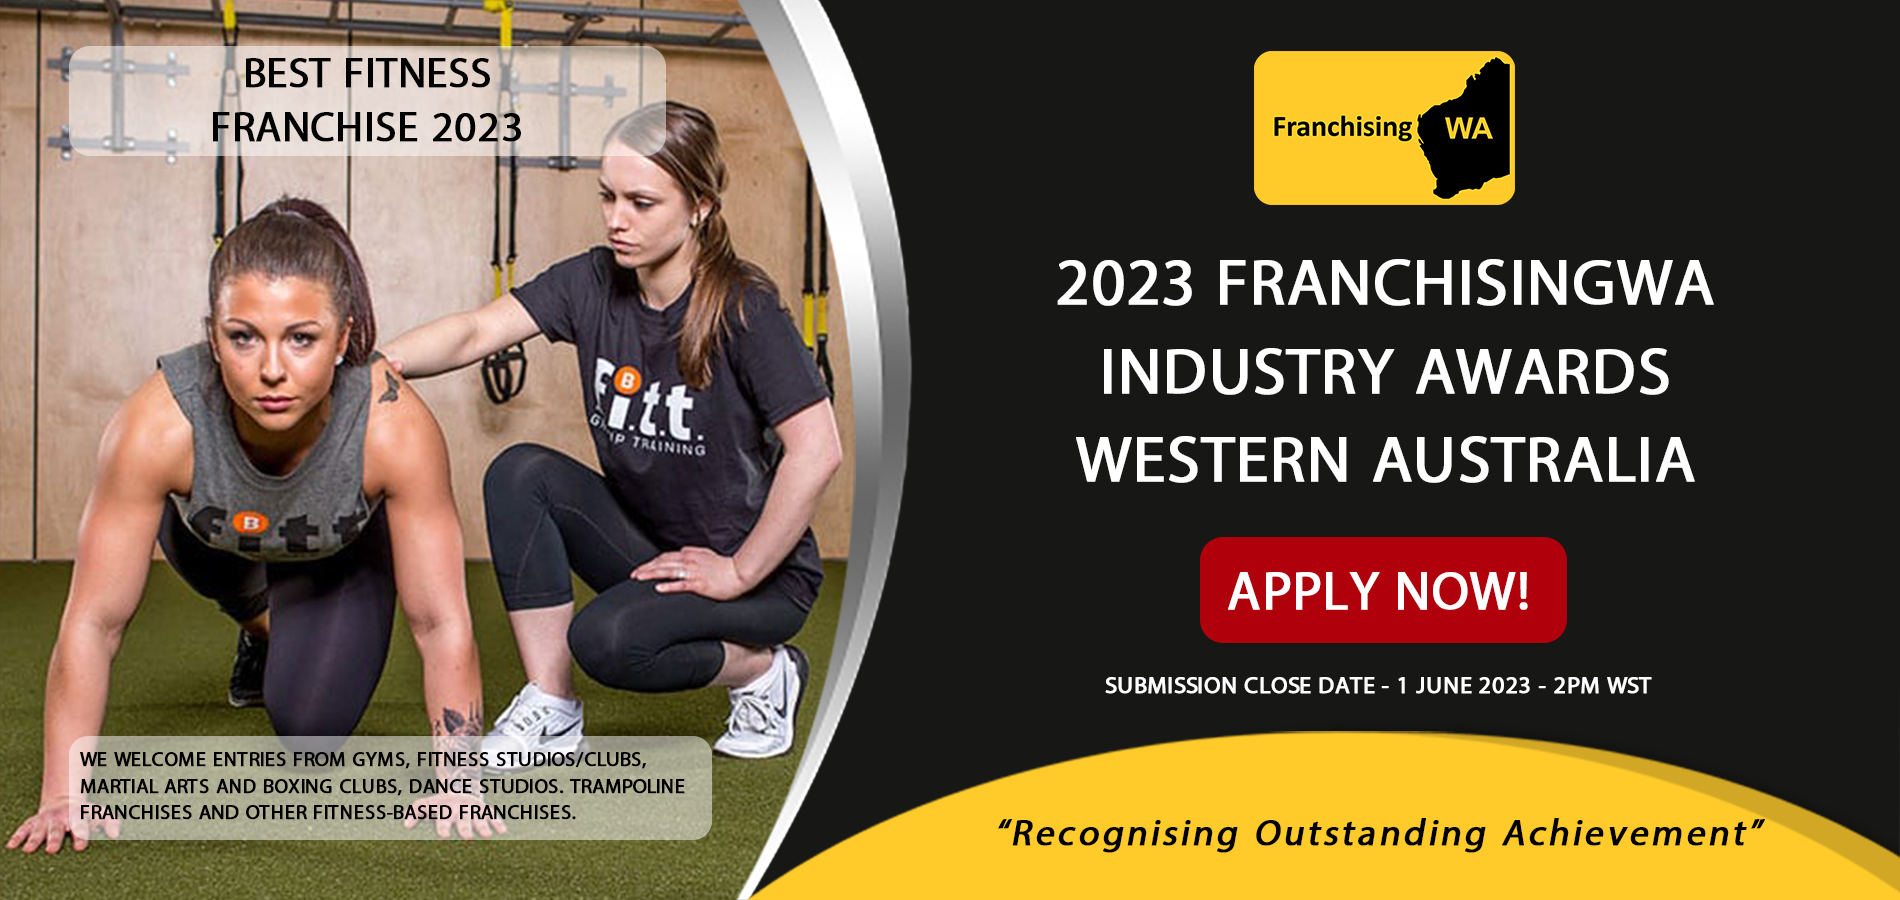 Introducing Our Best Fitness Franchise 2023 Award FranchisingWA Awards